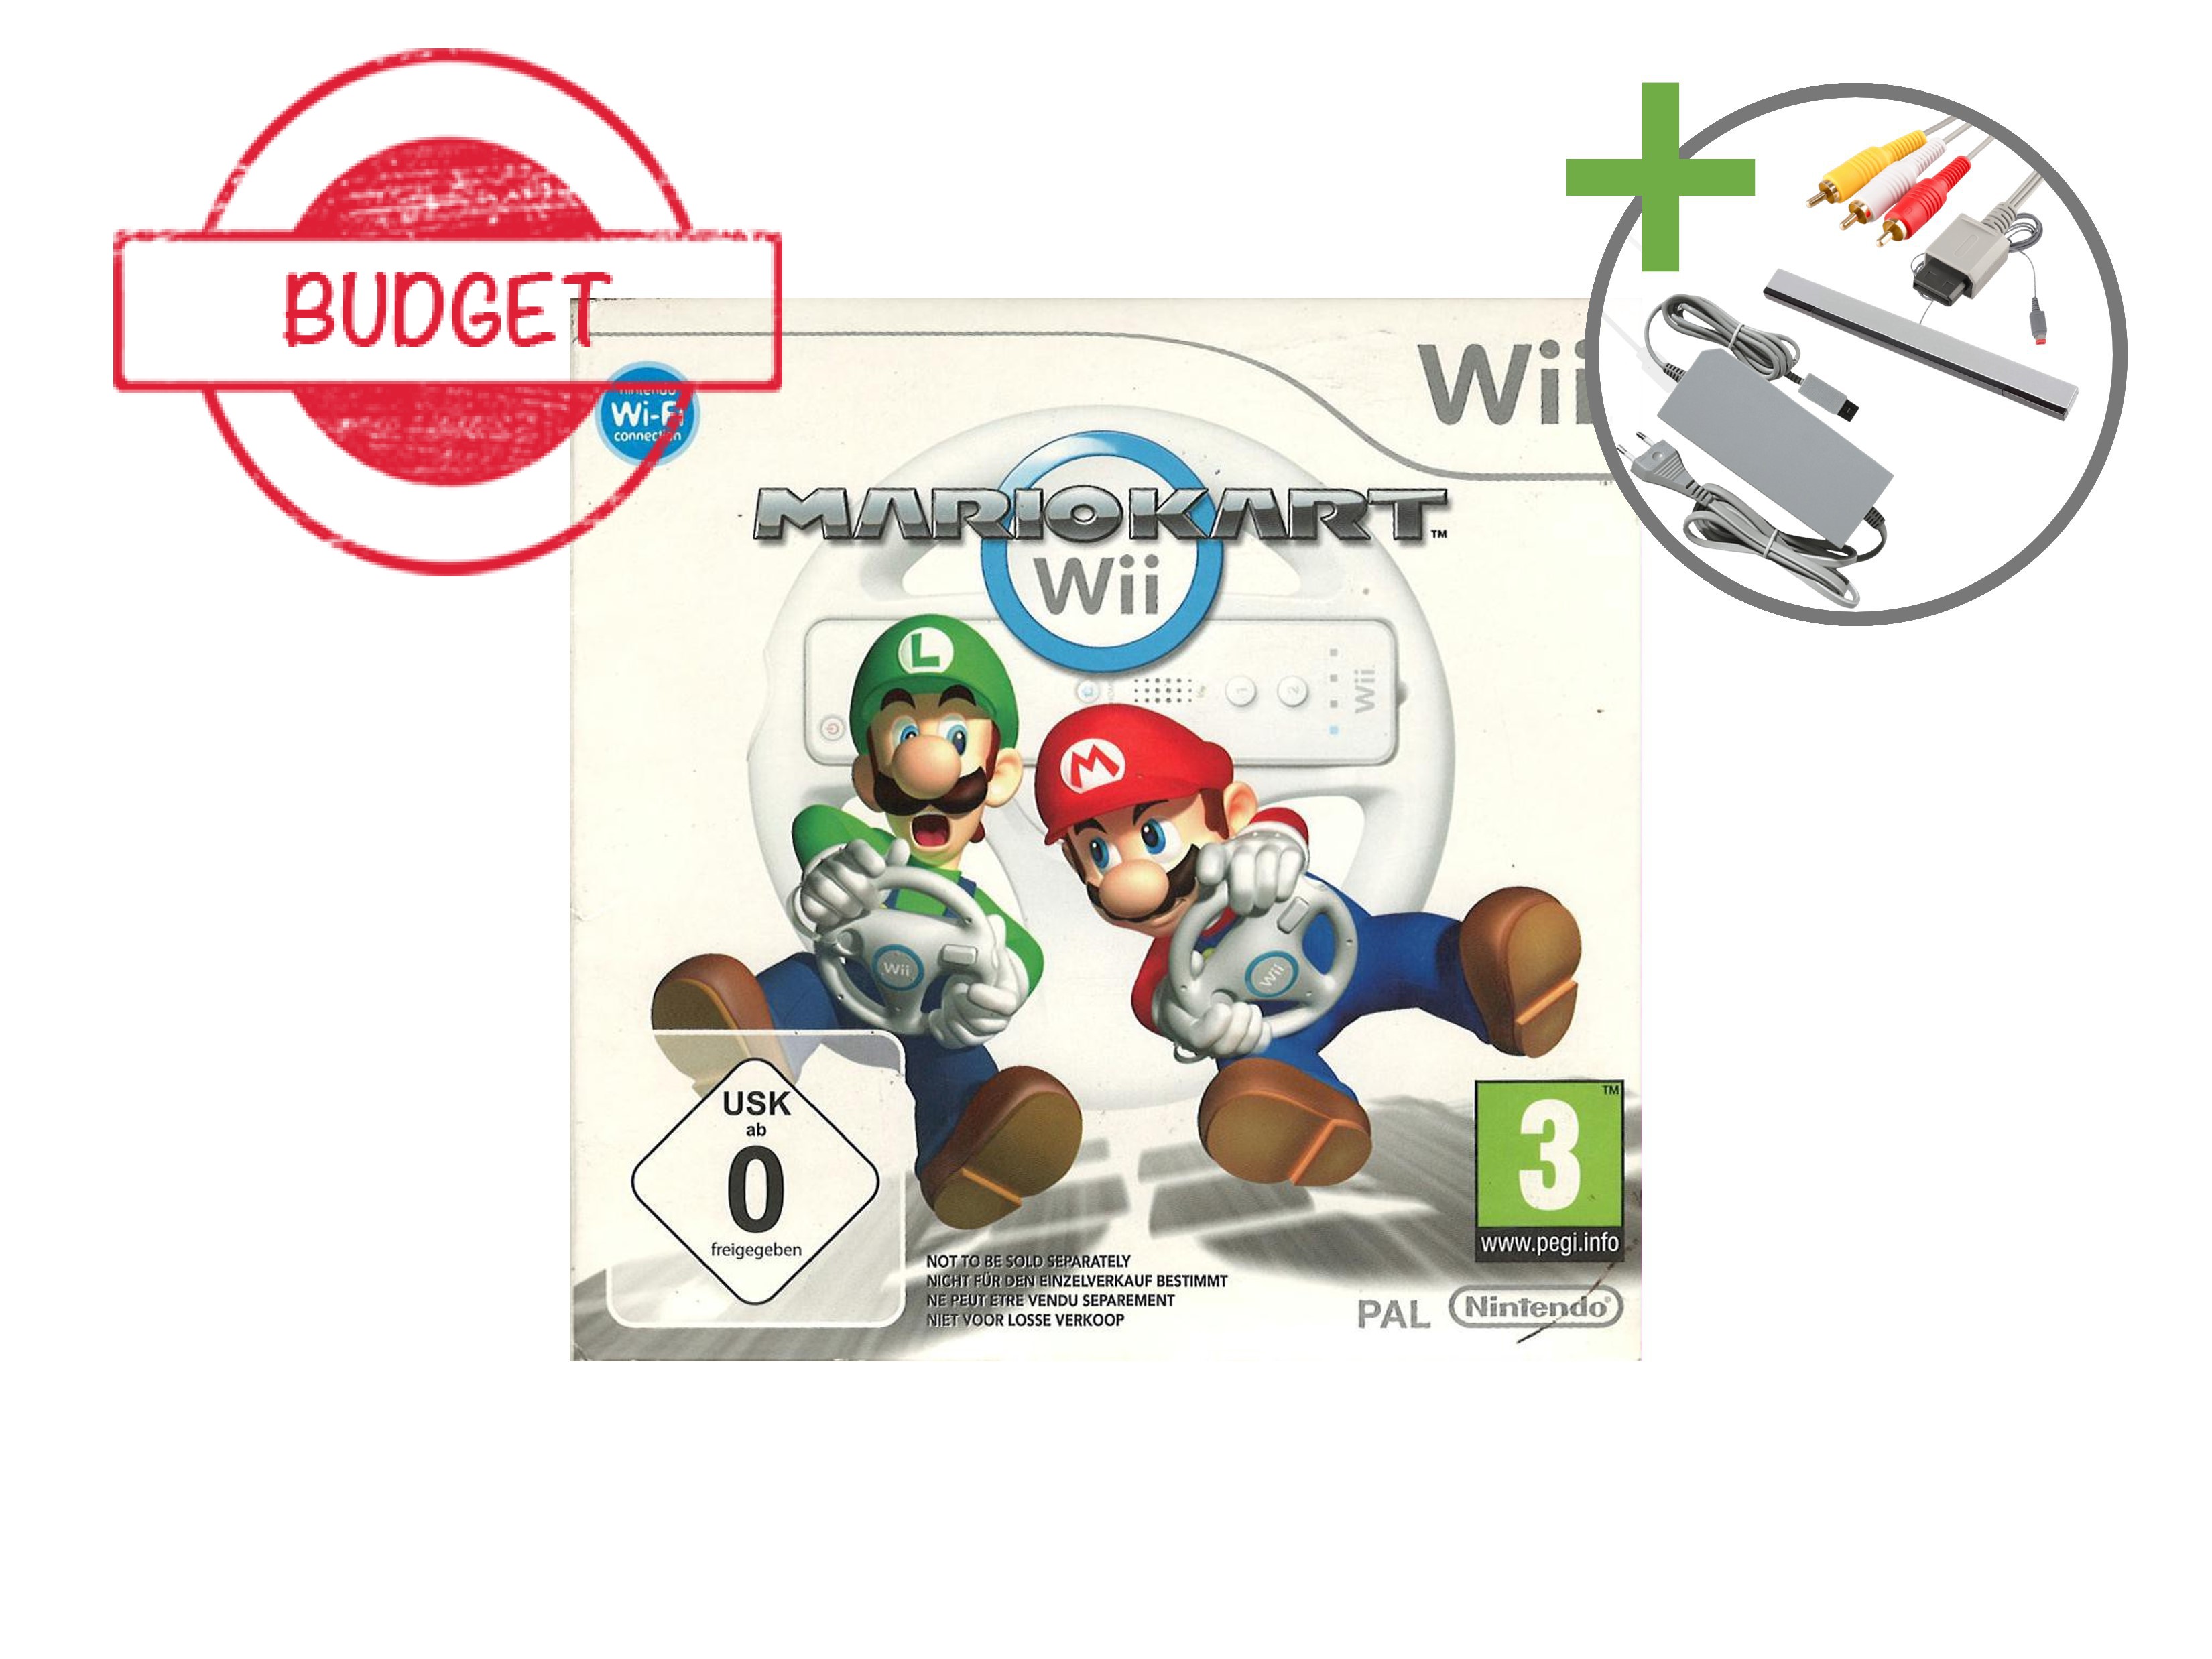 Nintendo Wii Mini Starter Pack - Mario Kart Wii Edition - Budget - Wii Hardware - 4